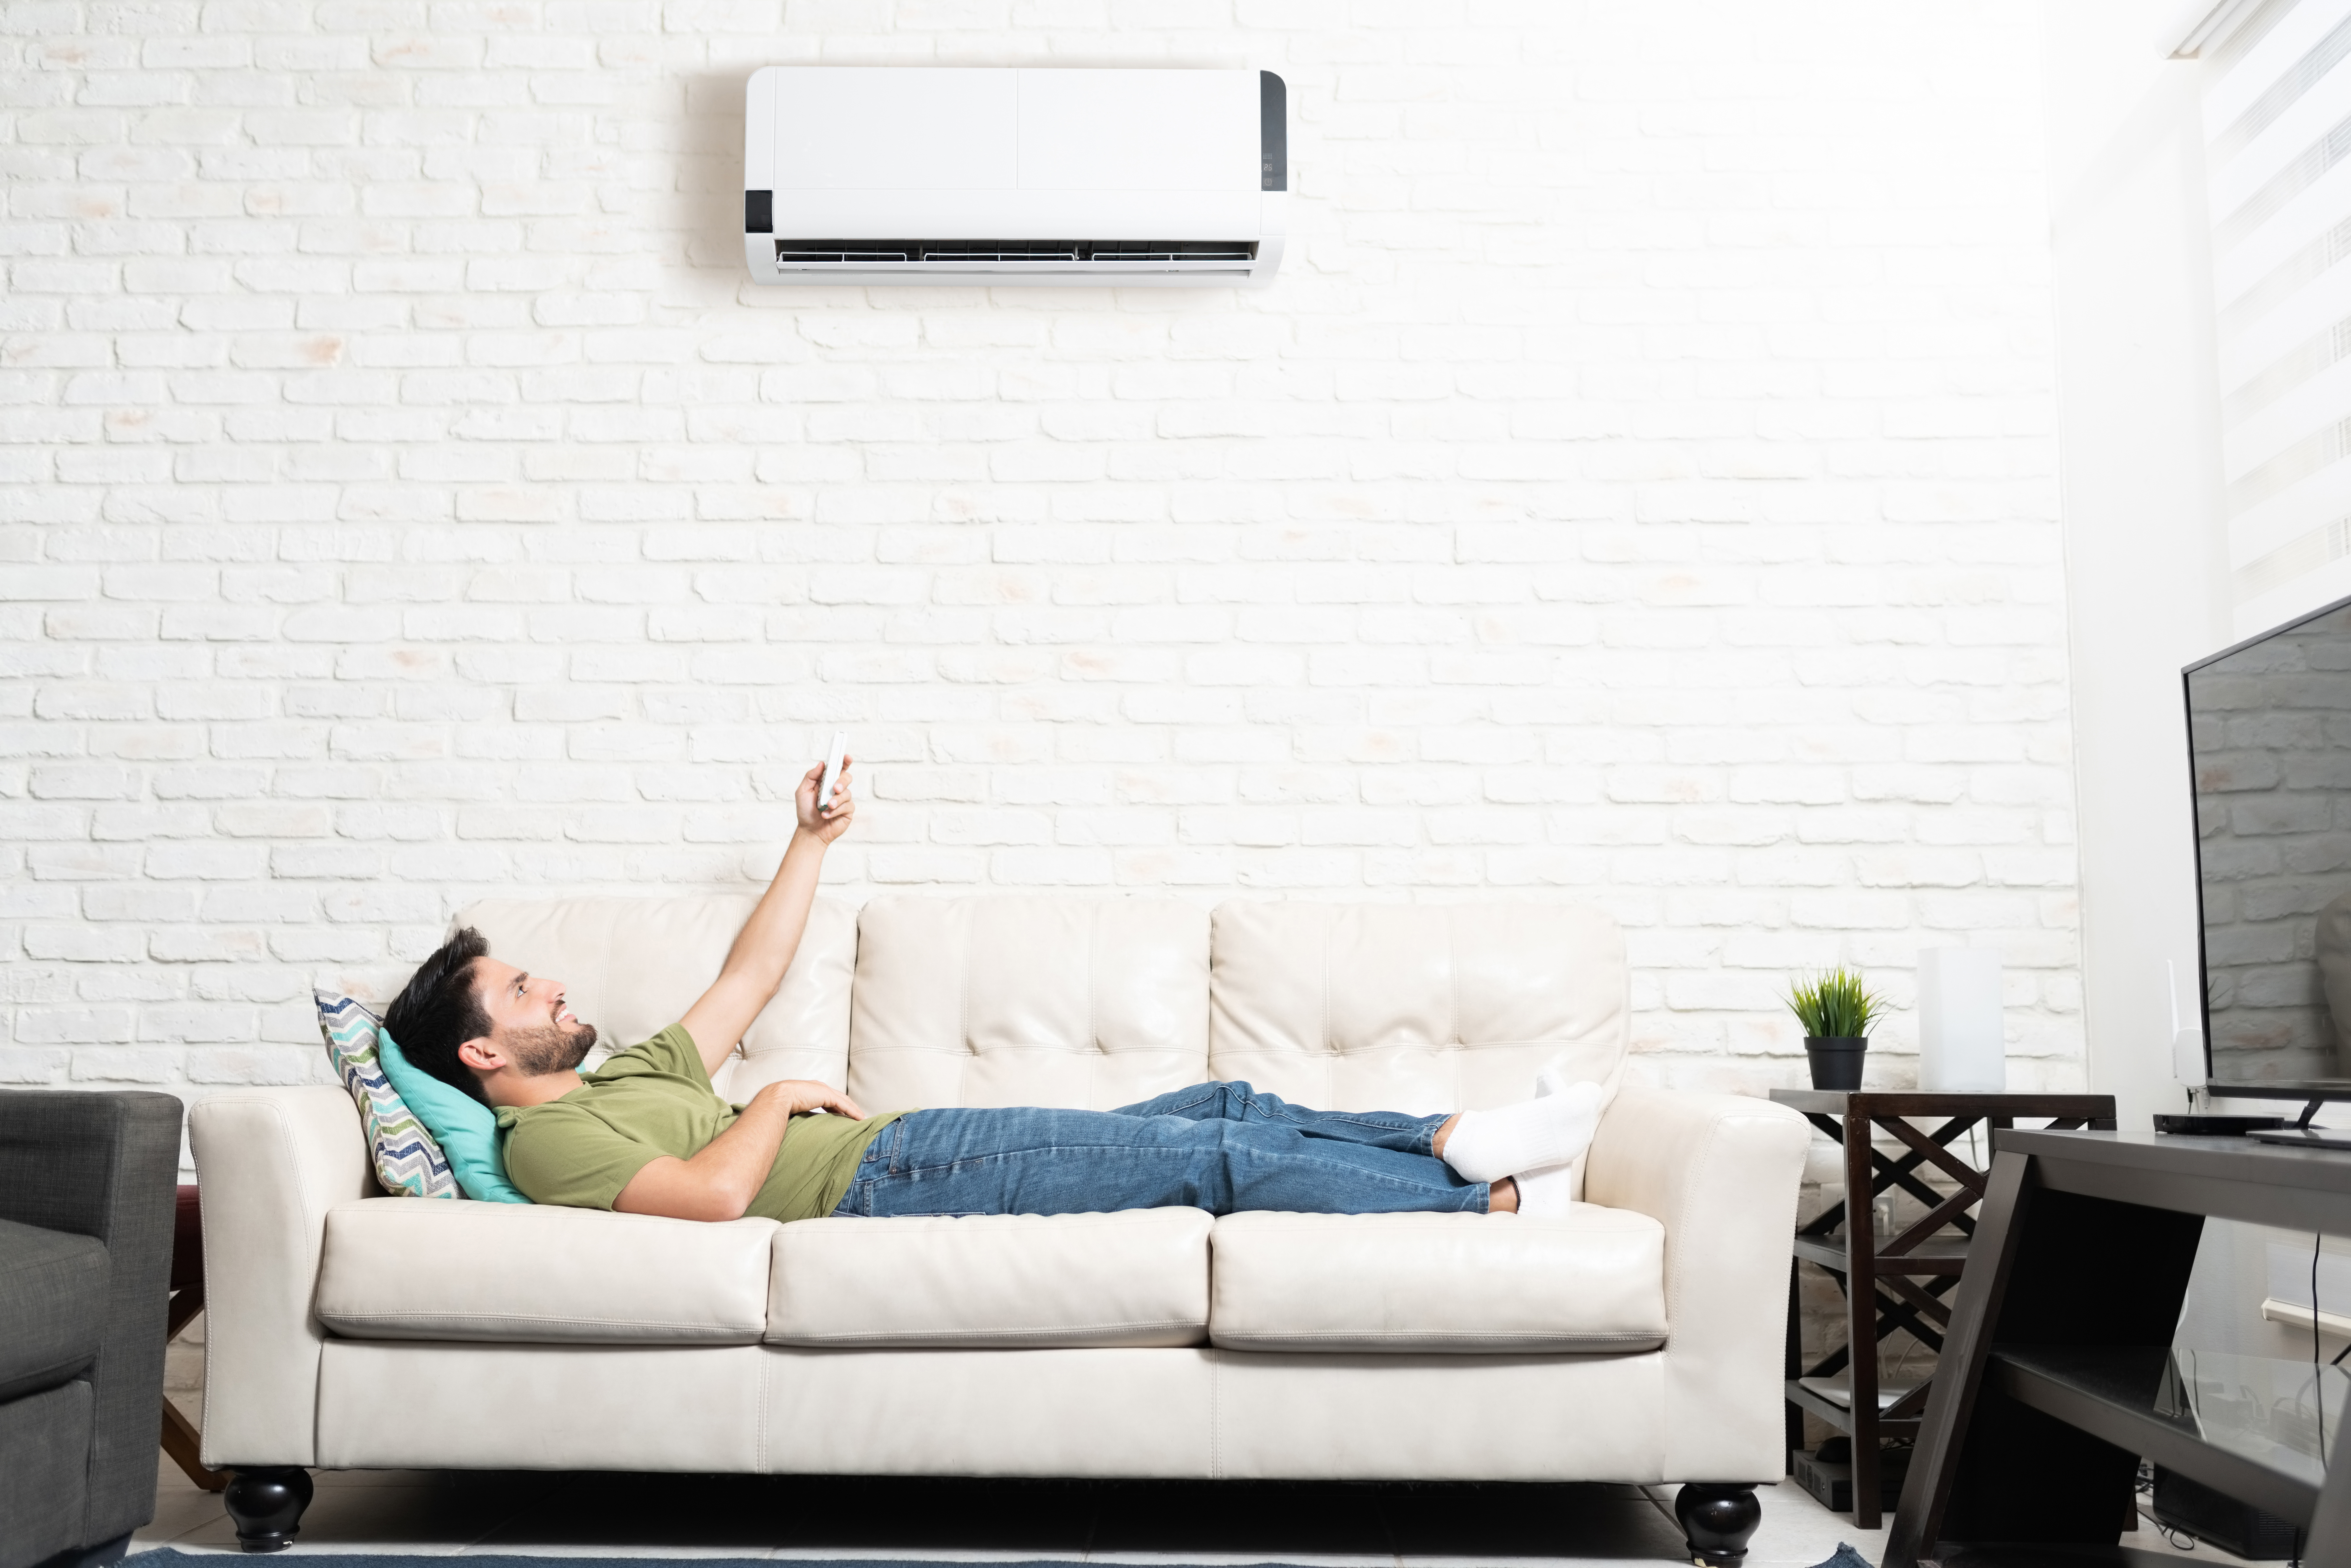 Heat Pumps – Higher savings, more comfort.